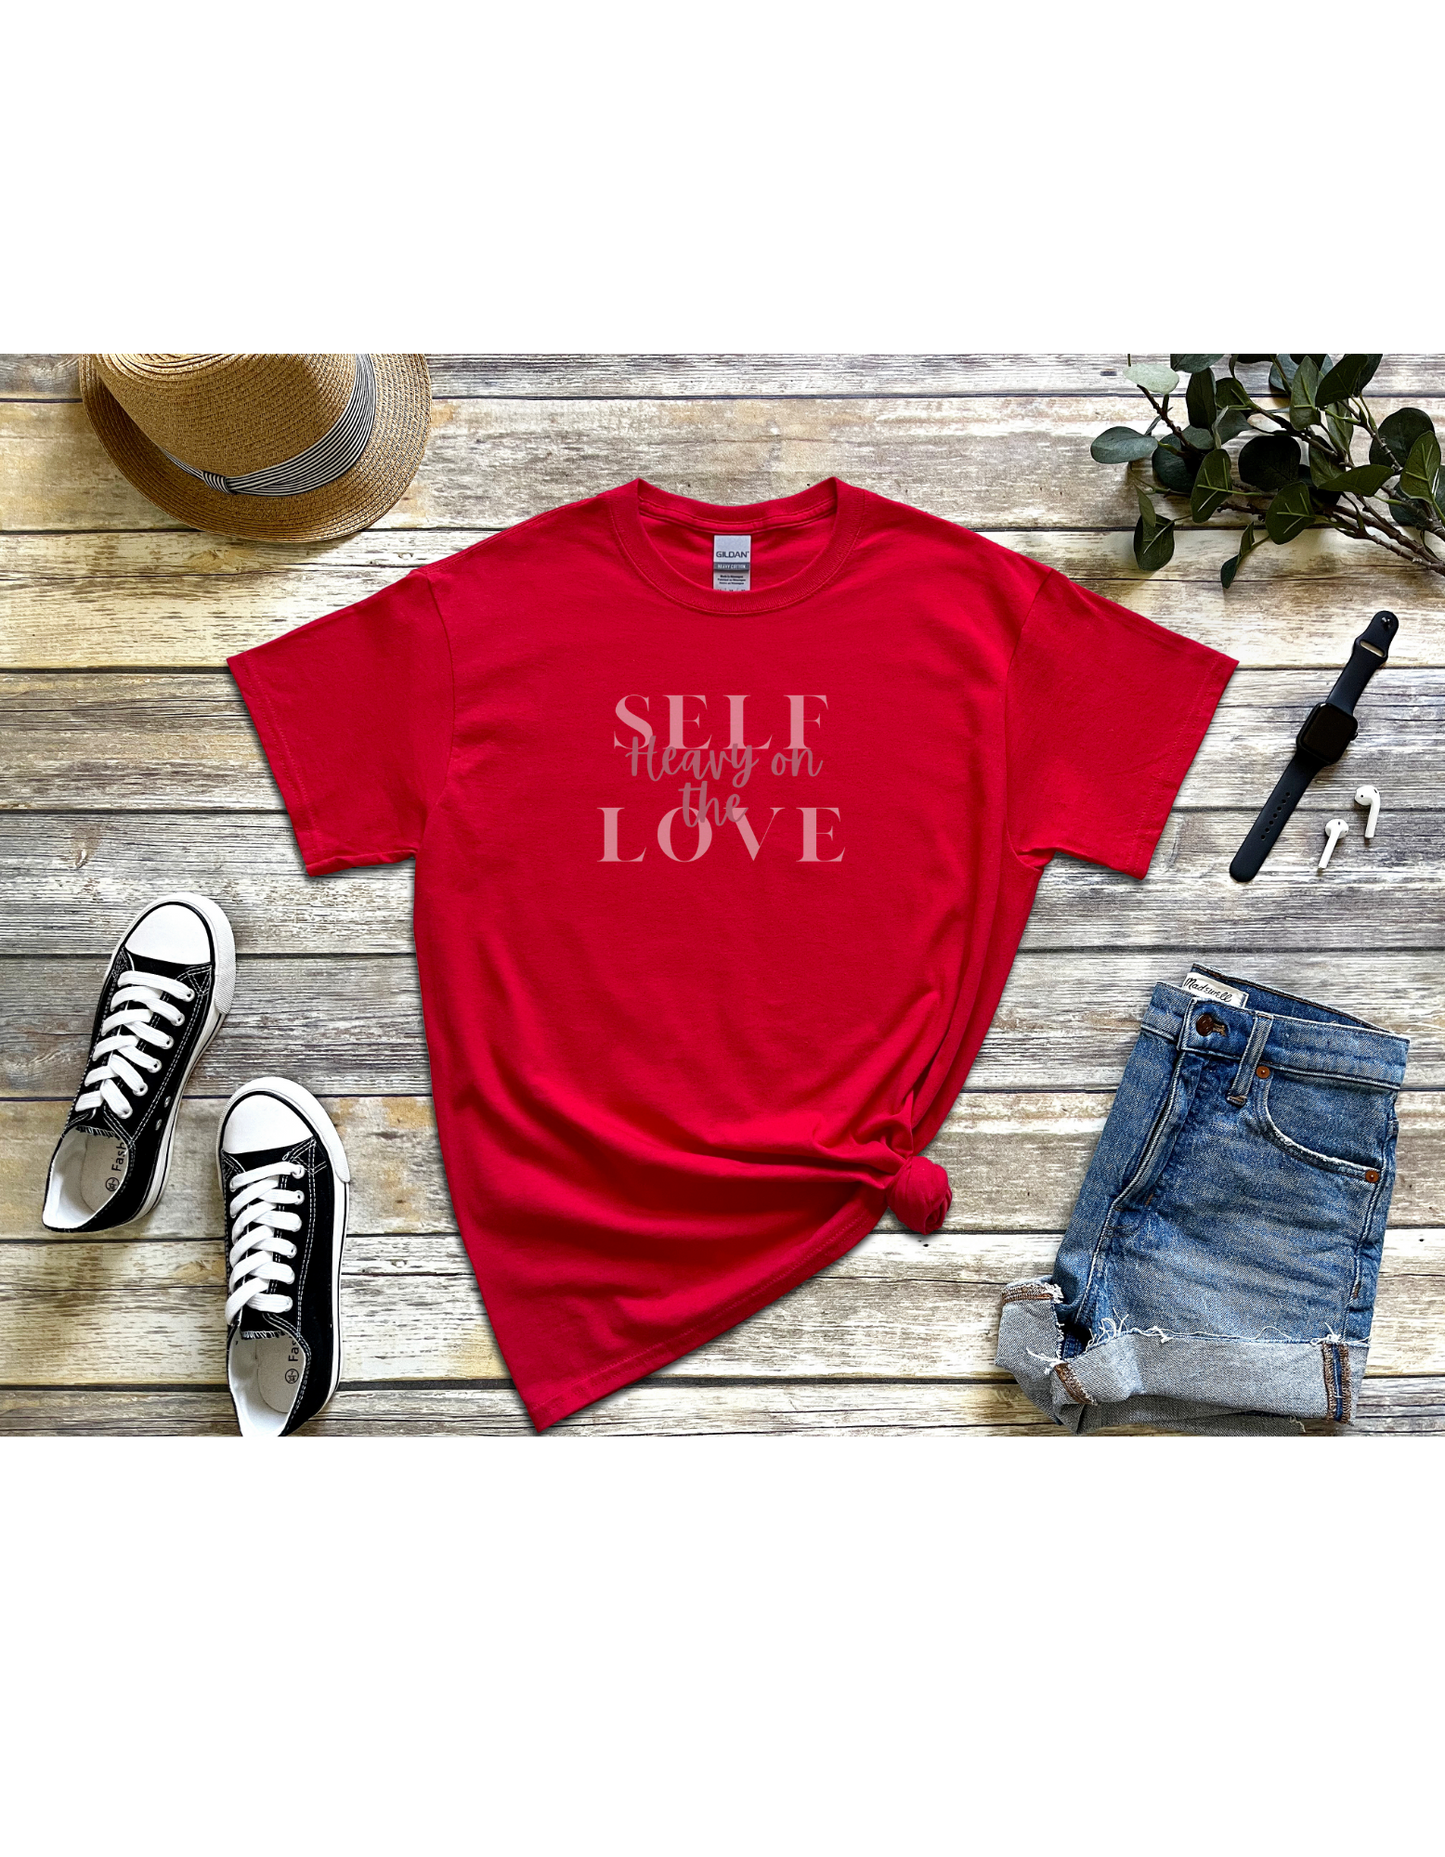 Heavy On The Self Love Inspirational T Shirt, Self Love Tee, Self Confidence Tee, Mindfulness Shirt